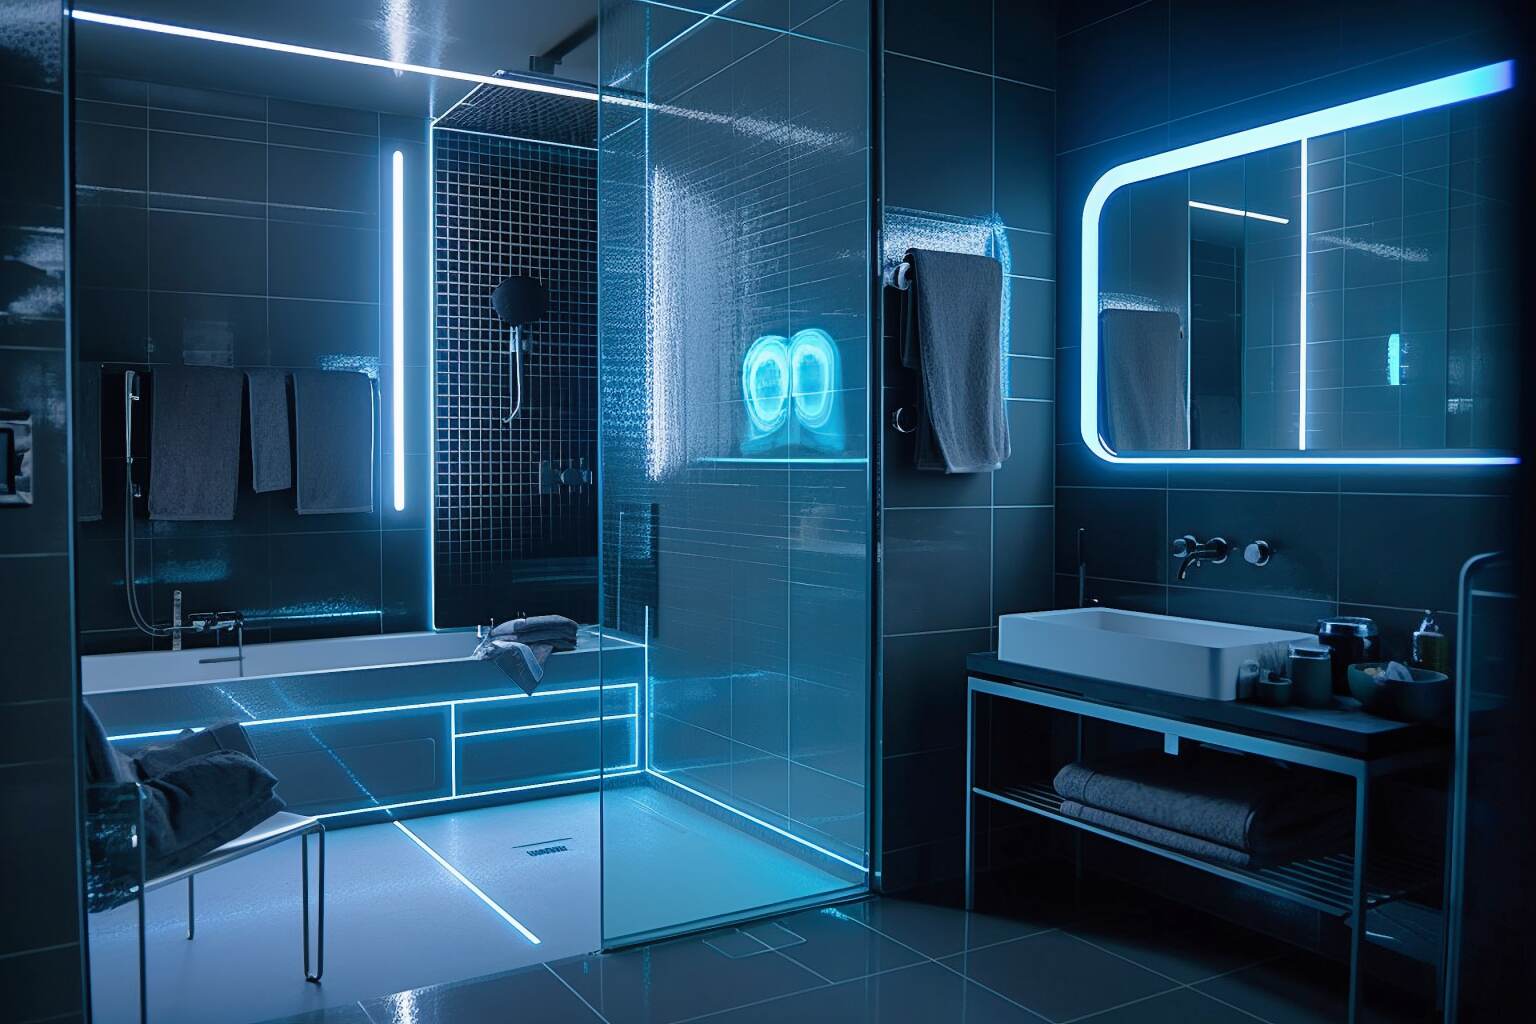 Minimalist Cyberpunk Style Bathroom With Voice Activation